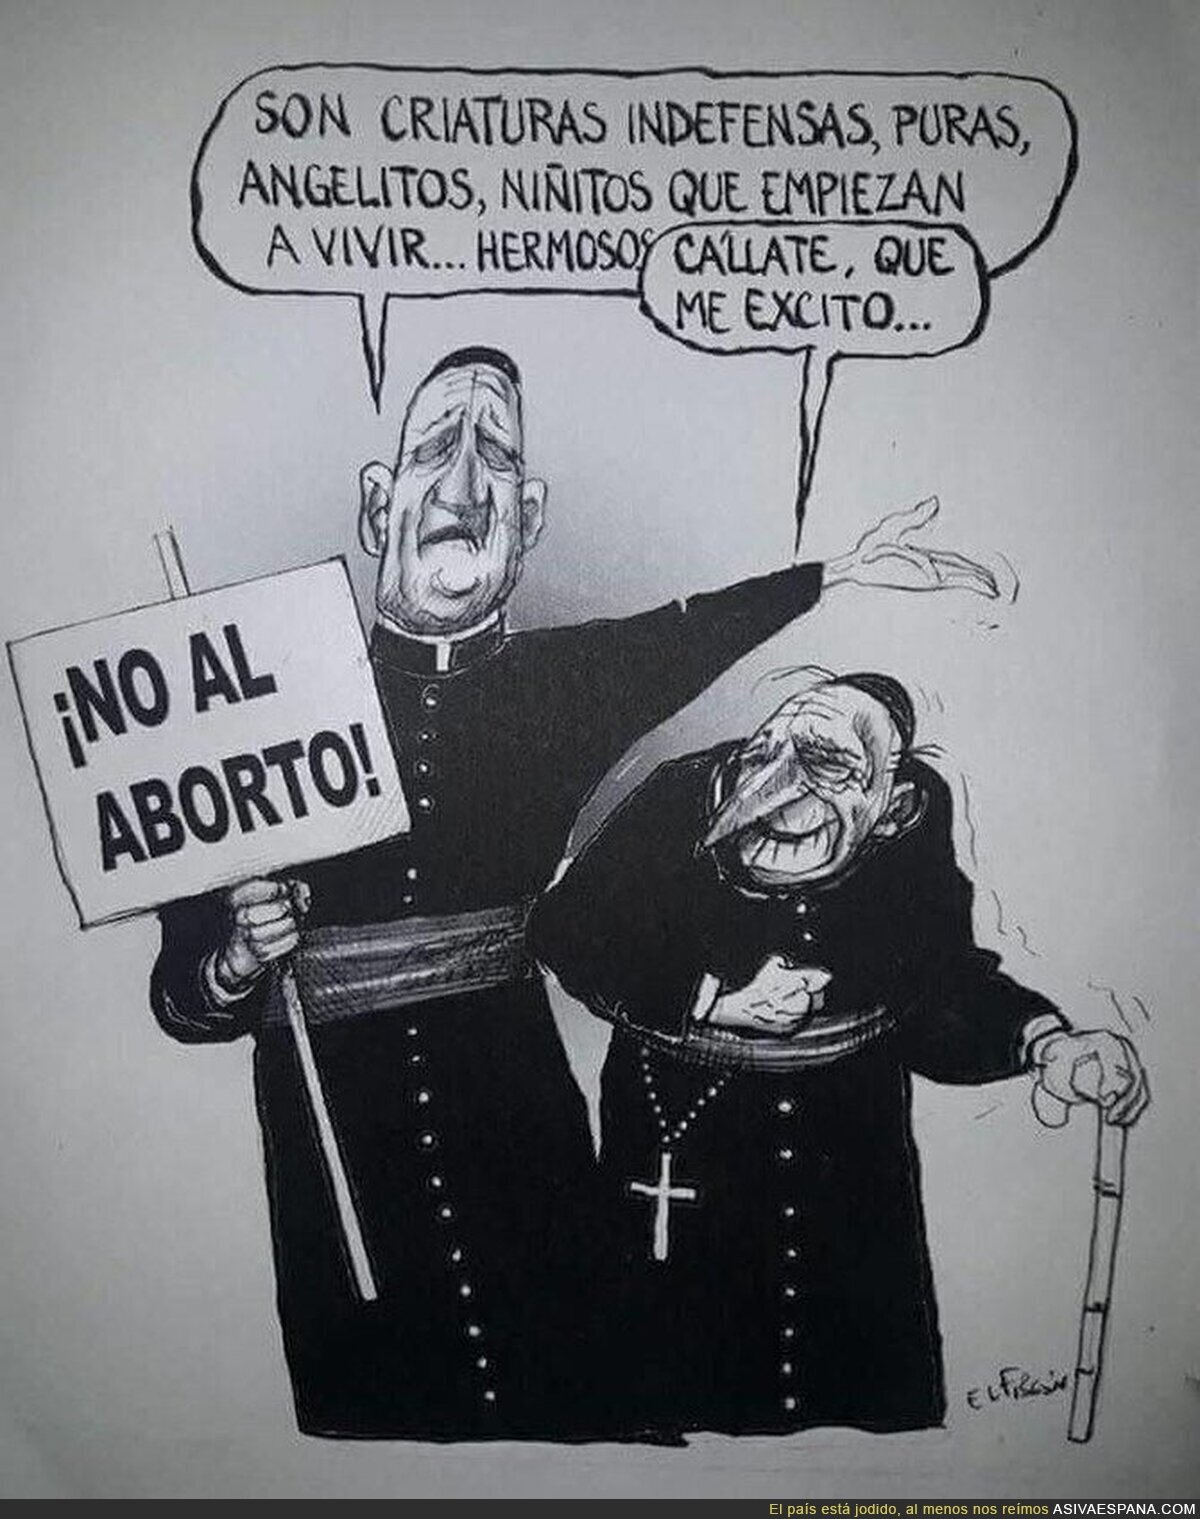 ¡NO AL ABORTO!